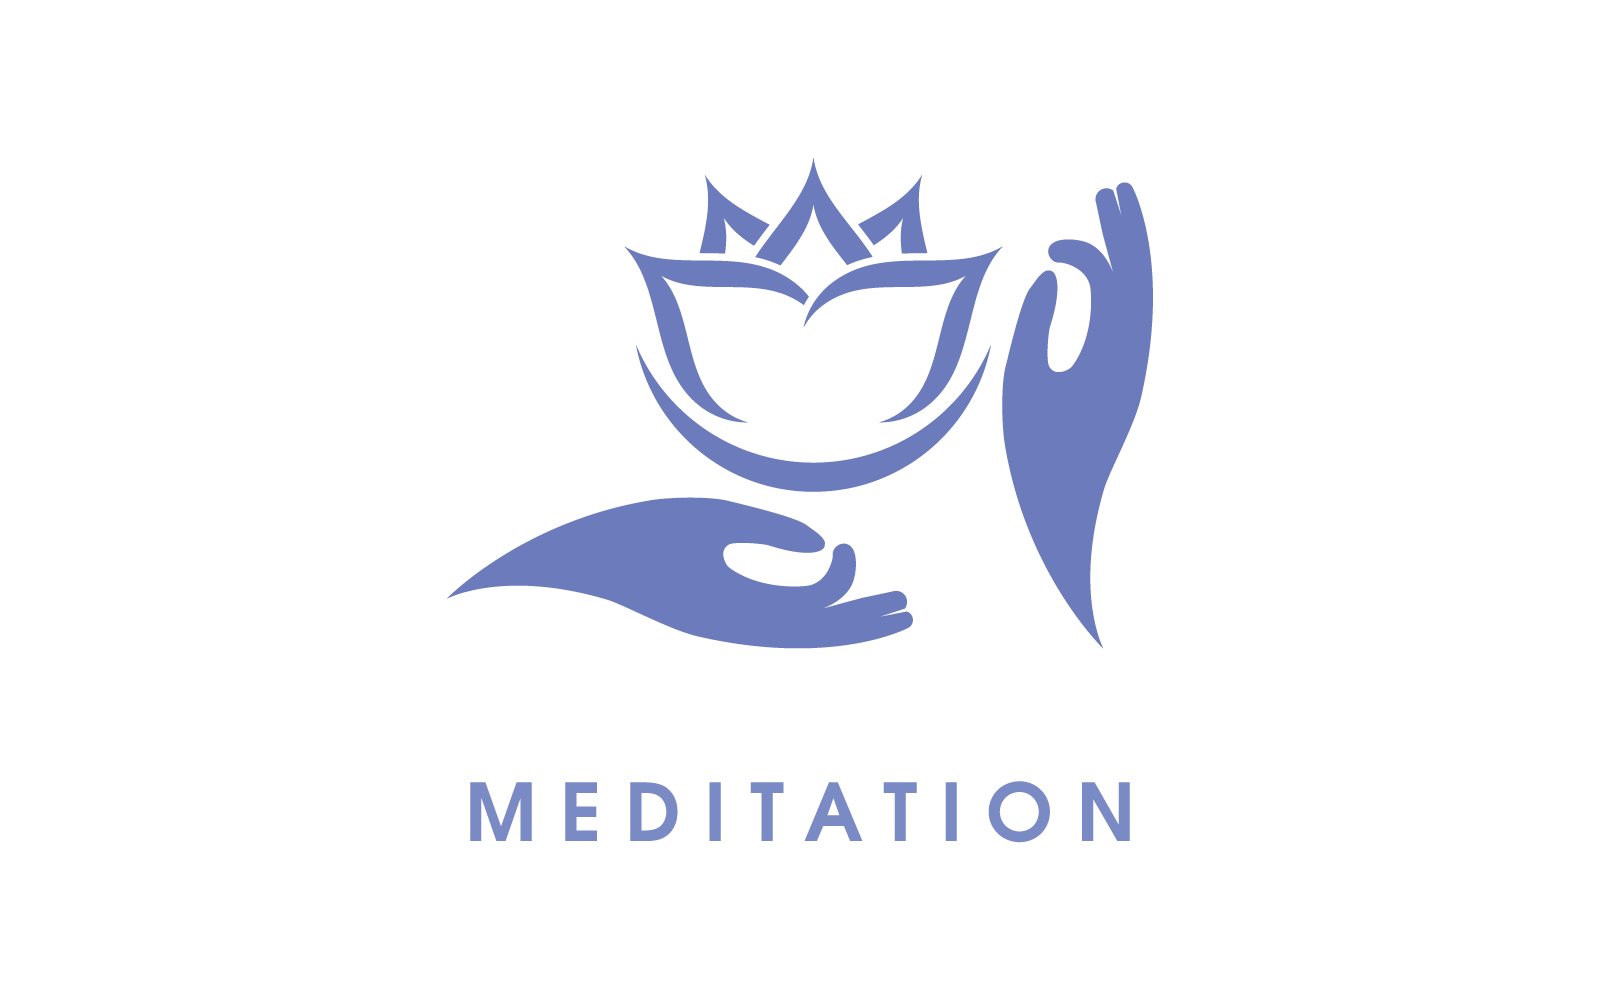 Meditation yoga arm logo design Logo Template